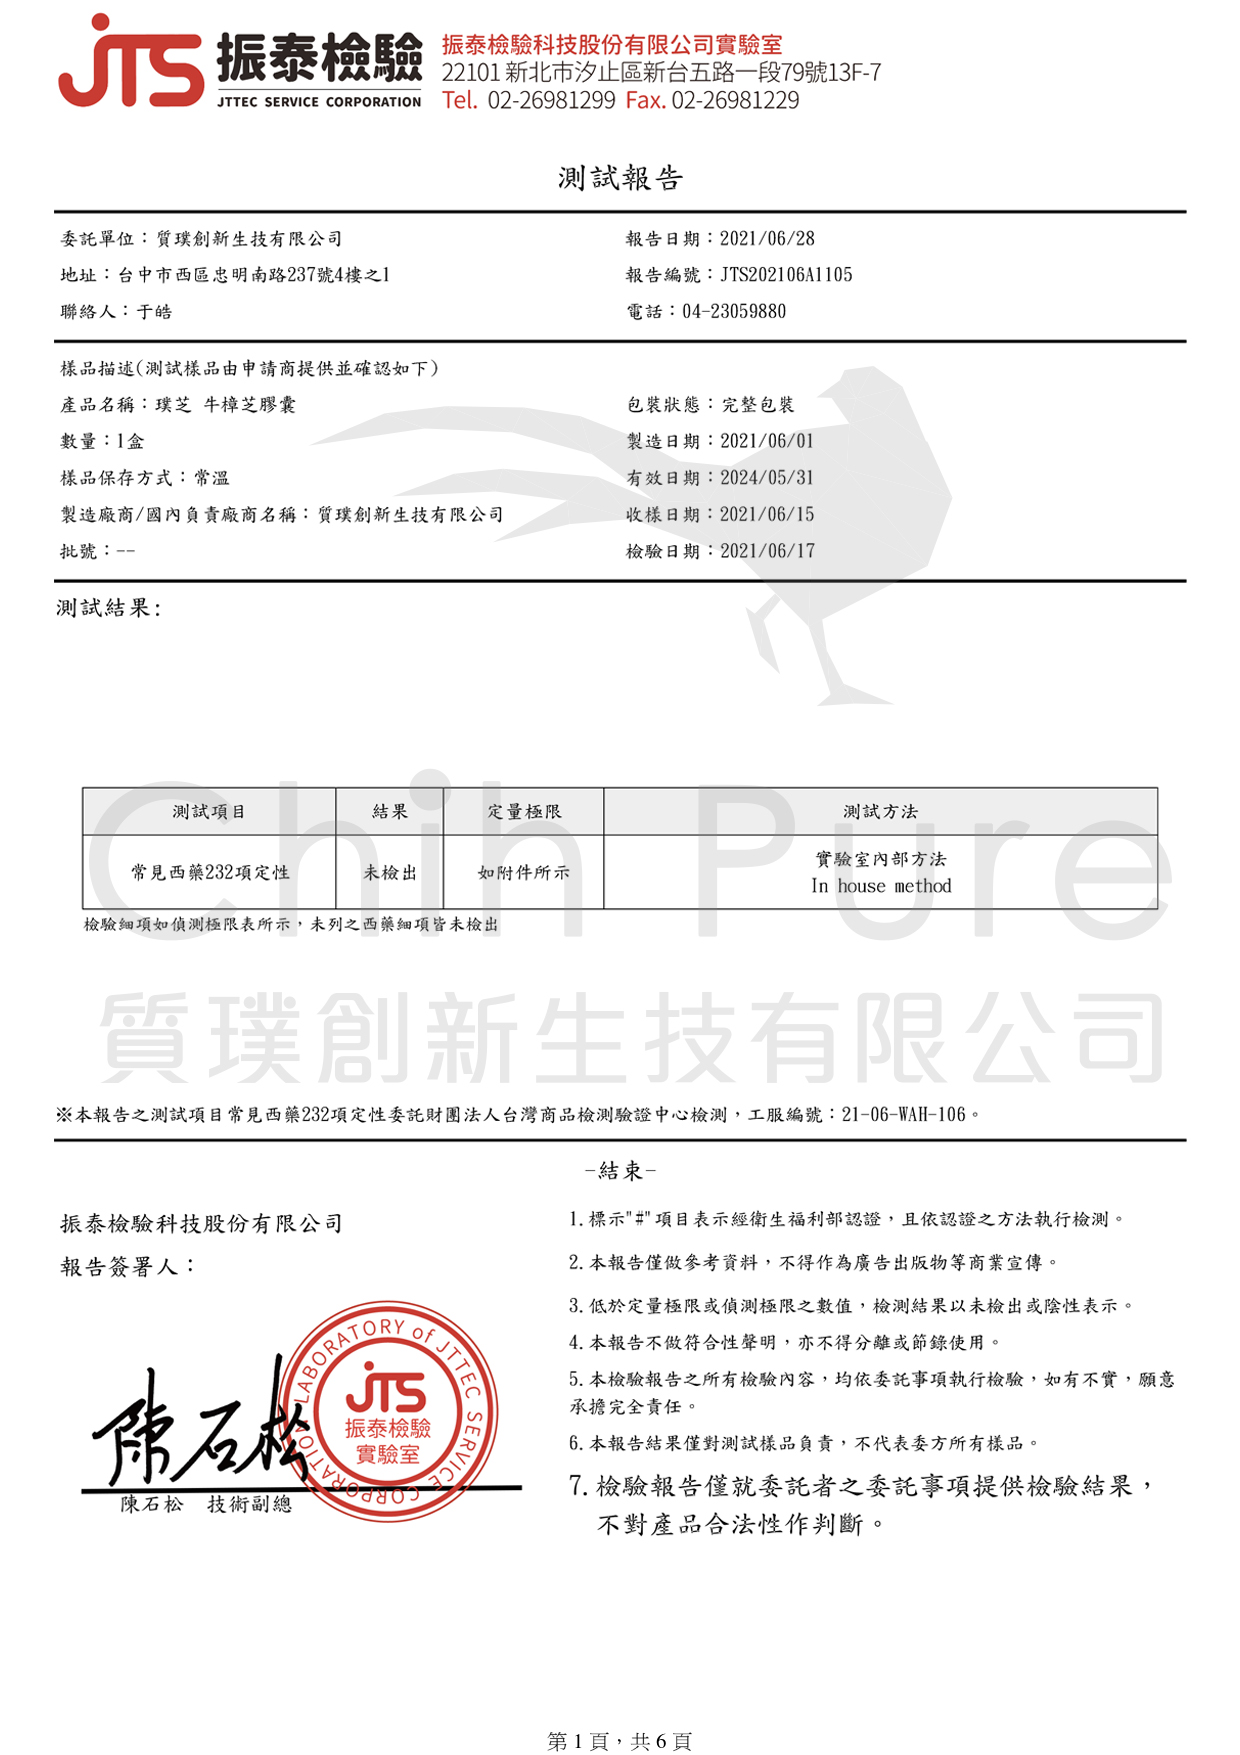 西藥JTS202307A3384(中文)_page-0001